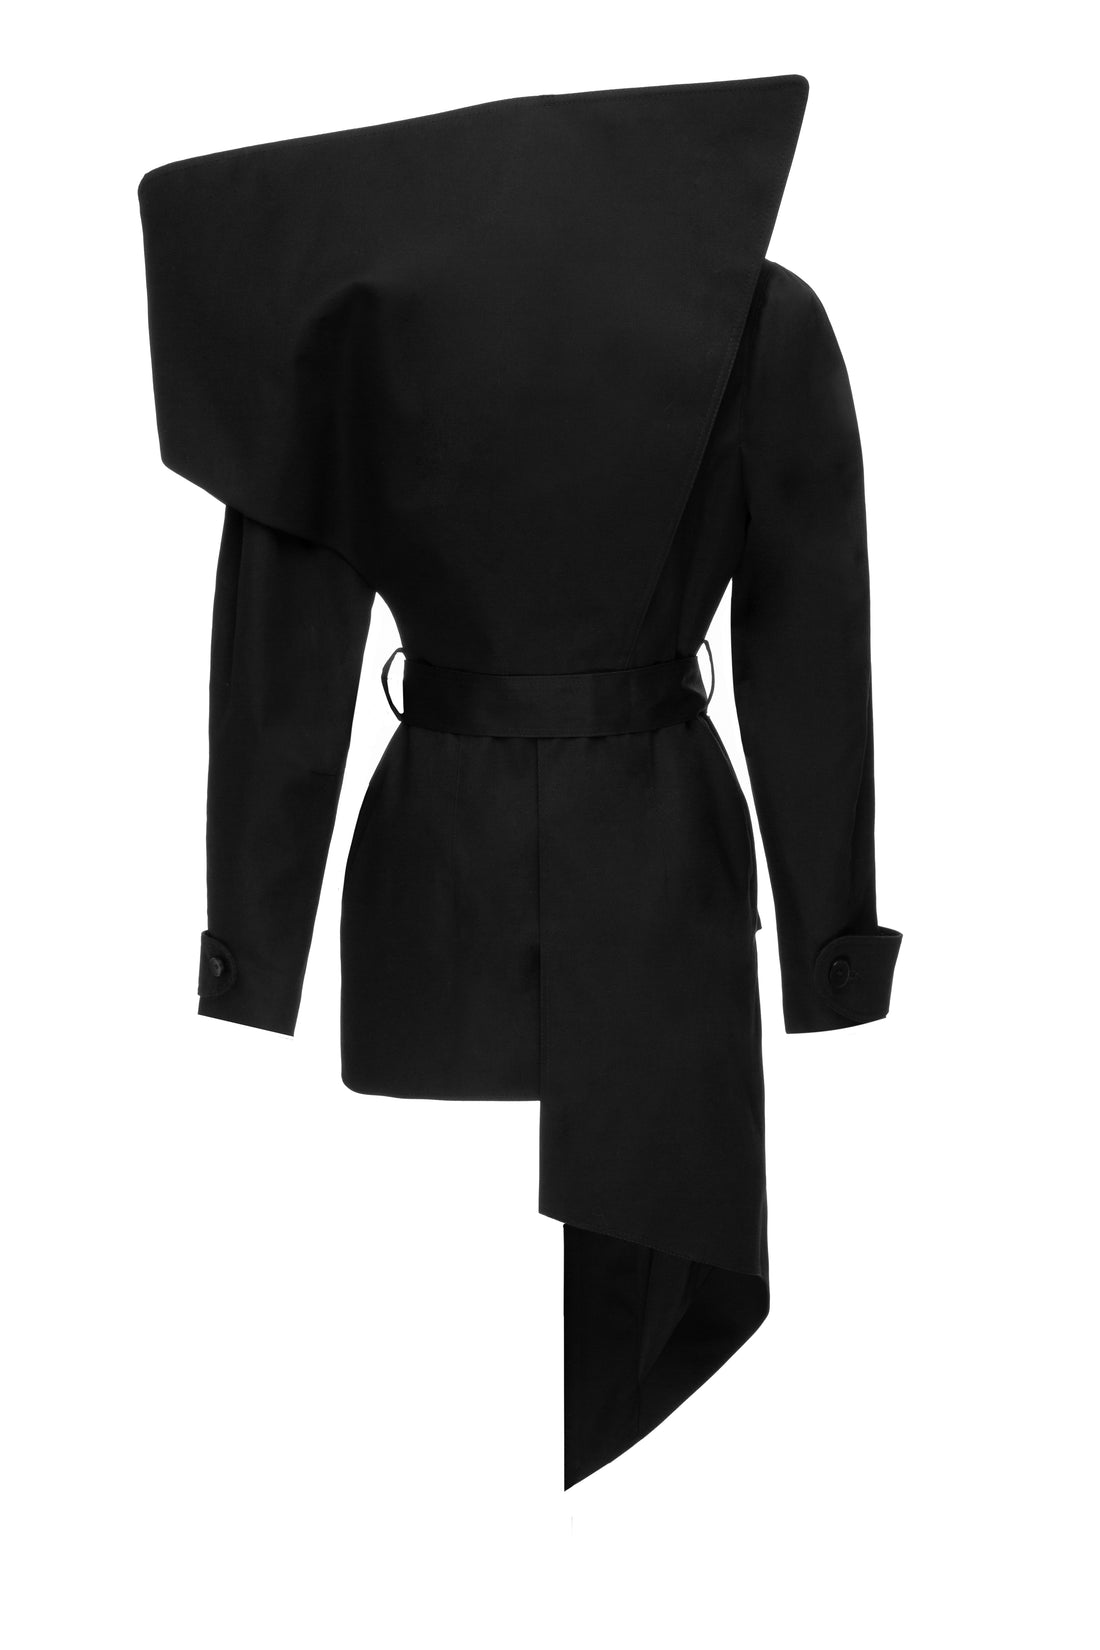 SITUATIONIST Black Asymmetrical Coat